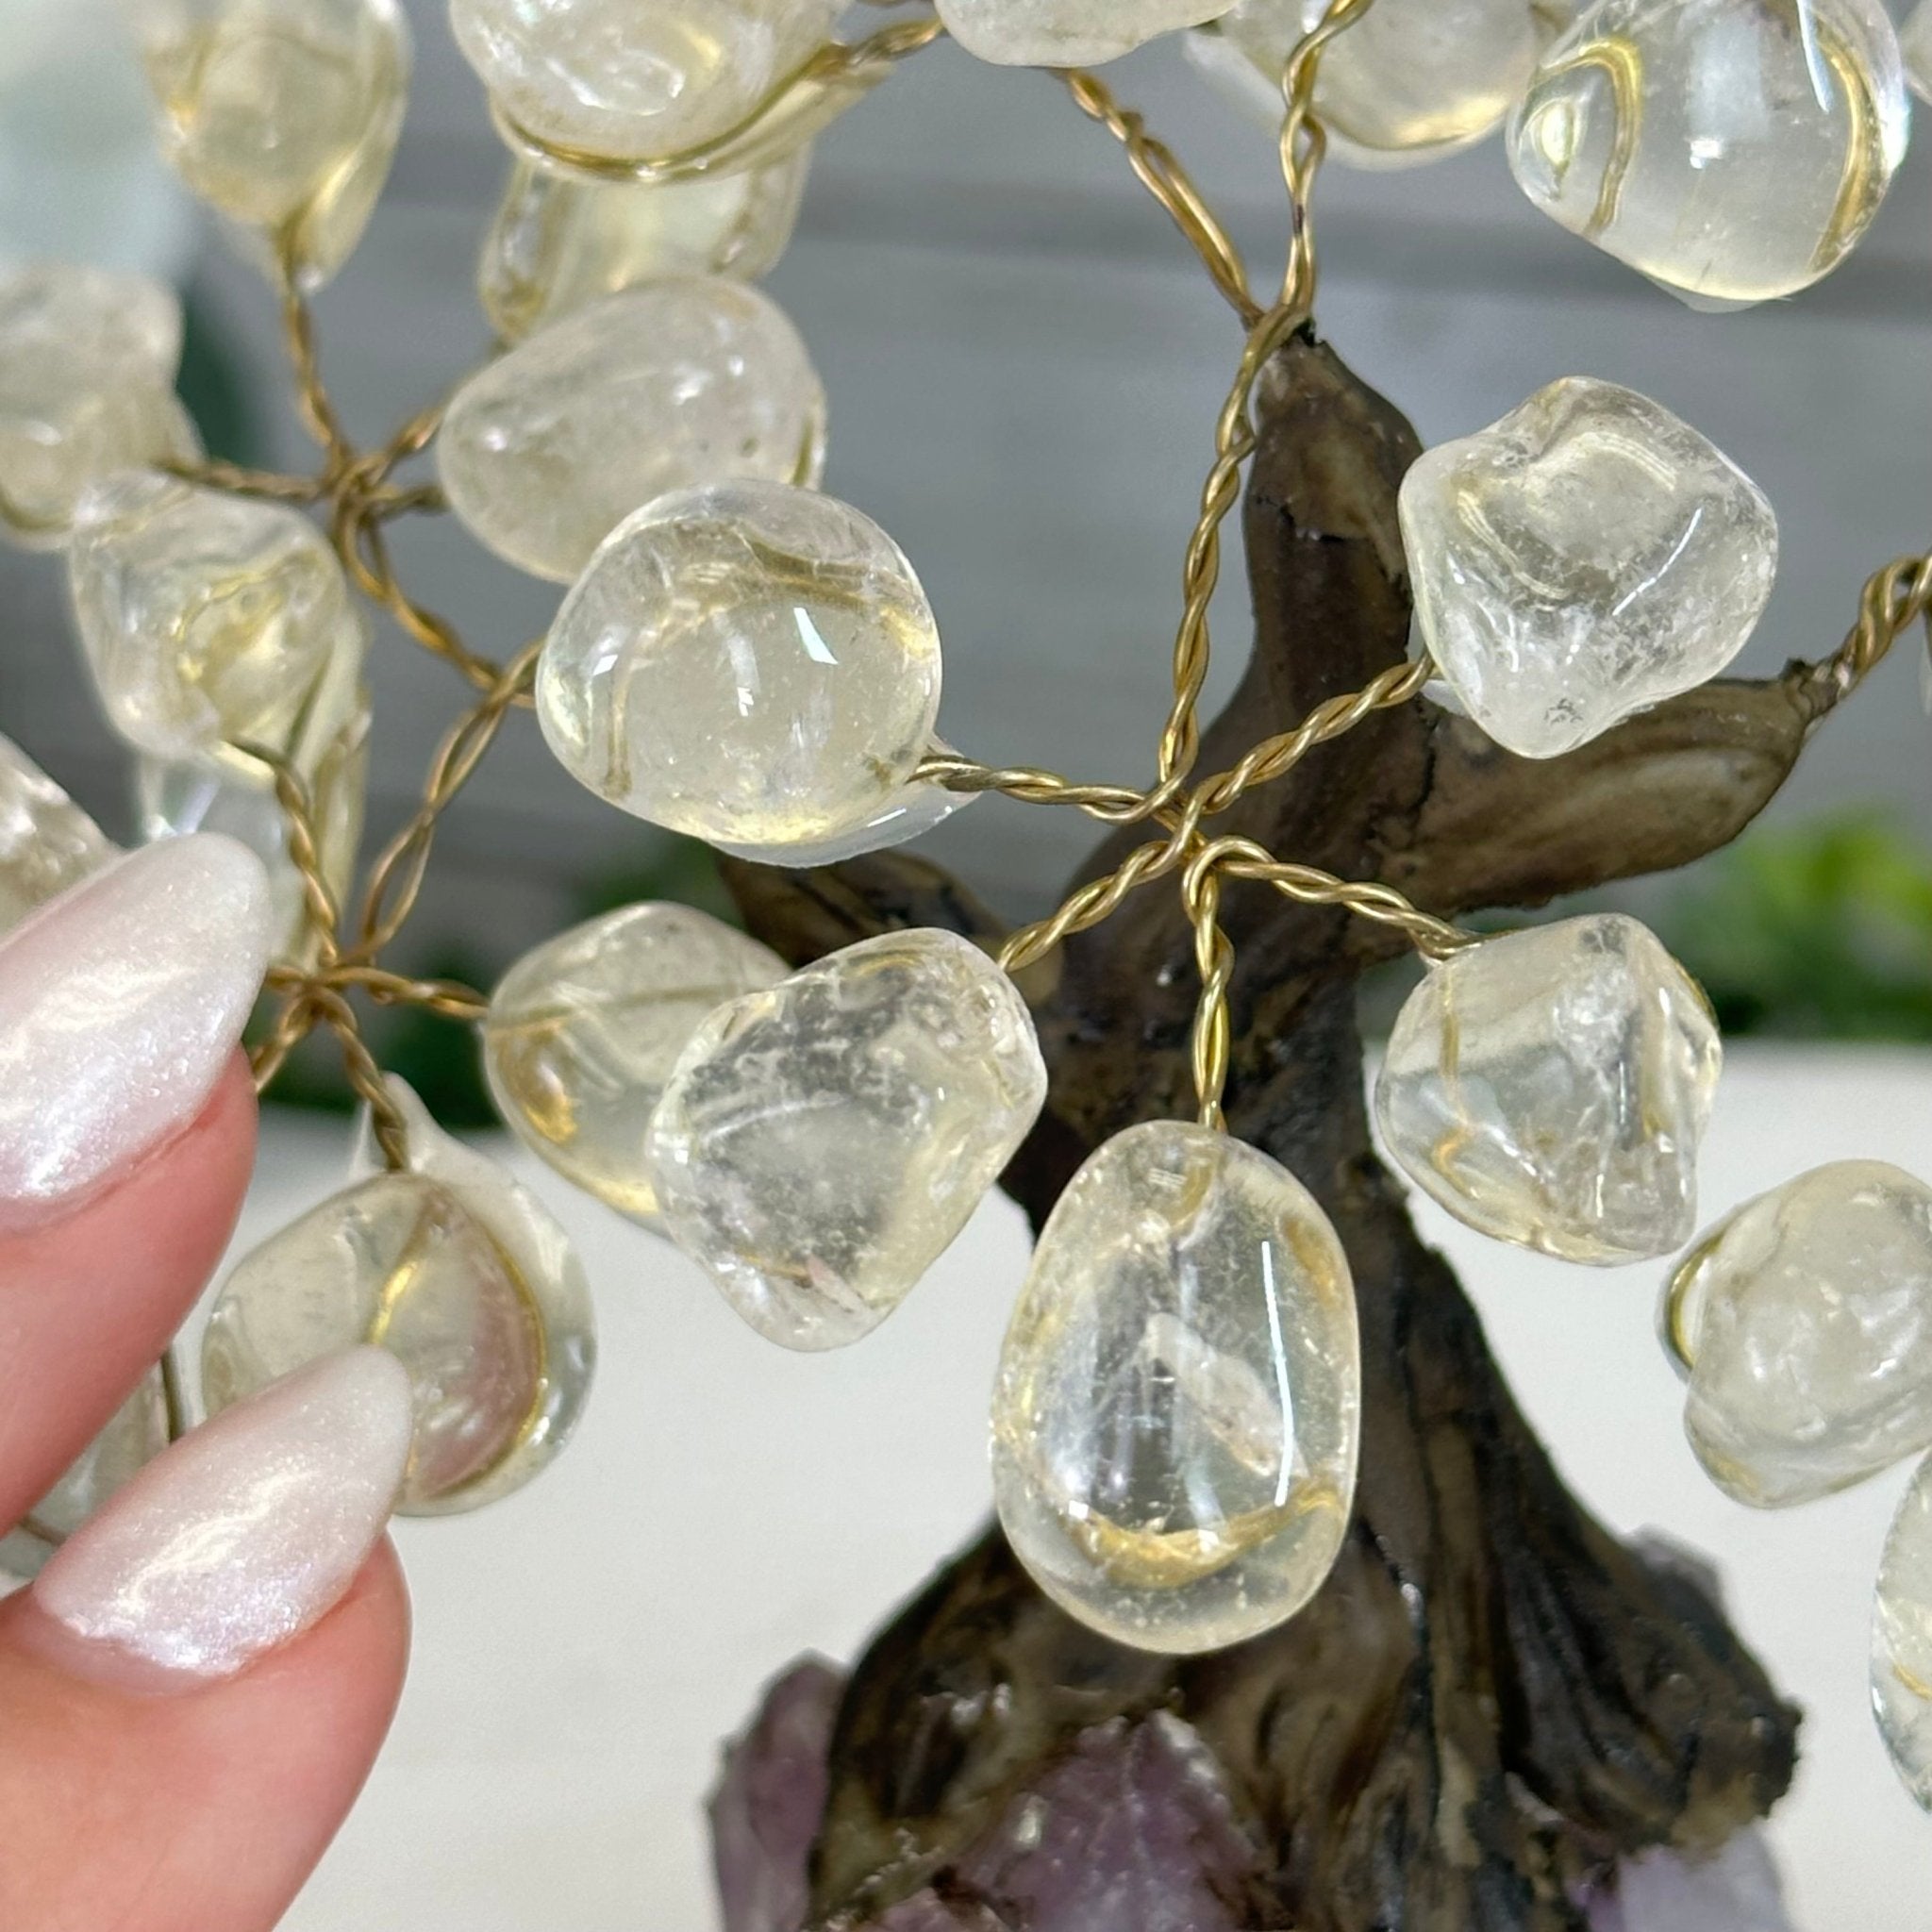 Clear Quartz 5" Tall Handmade Gemstone Tree on a Crystal base, 35 Gems #5401CLRQ - Brazil GemsBrazil GemsClear Quartz 5" Tall Handmade Gemstone Tree on a Crystal base, 35 Gems #5401CLRQGemstone Trees5401CLRQ